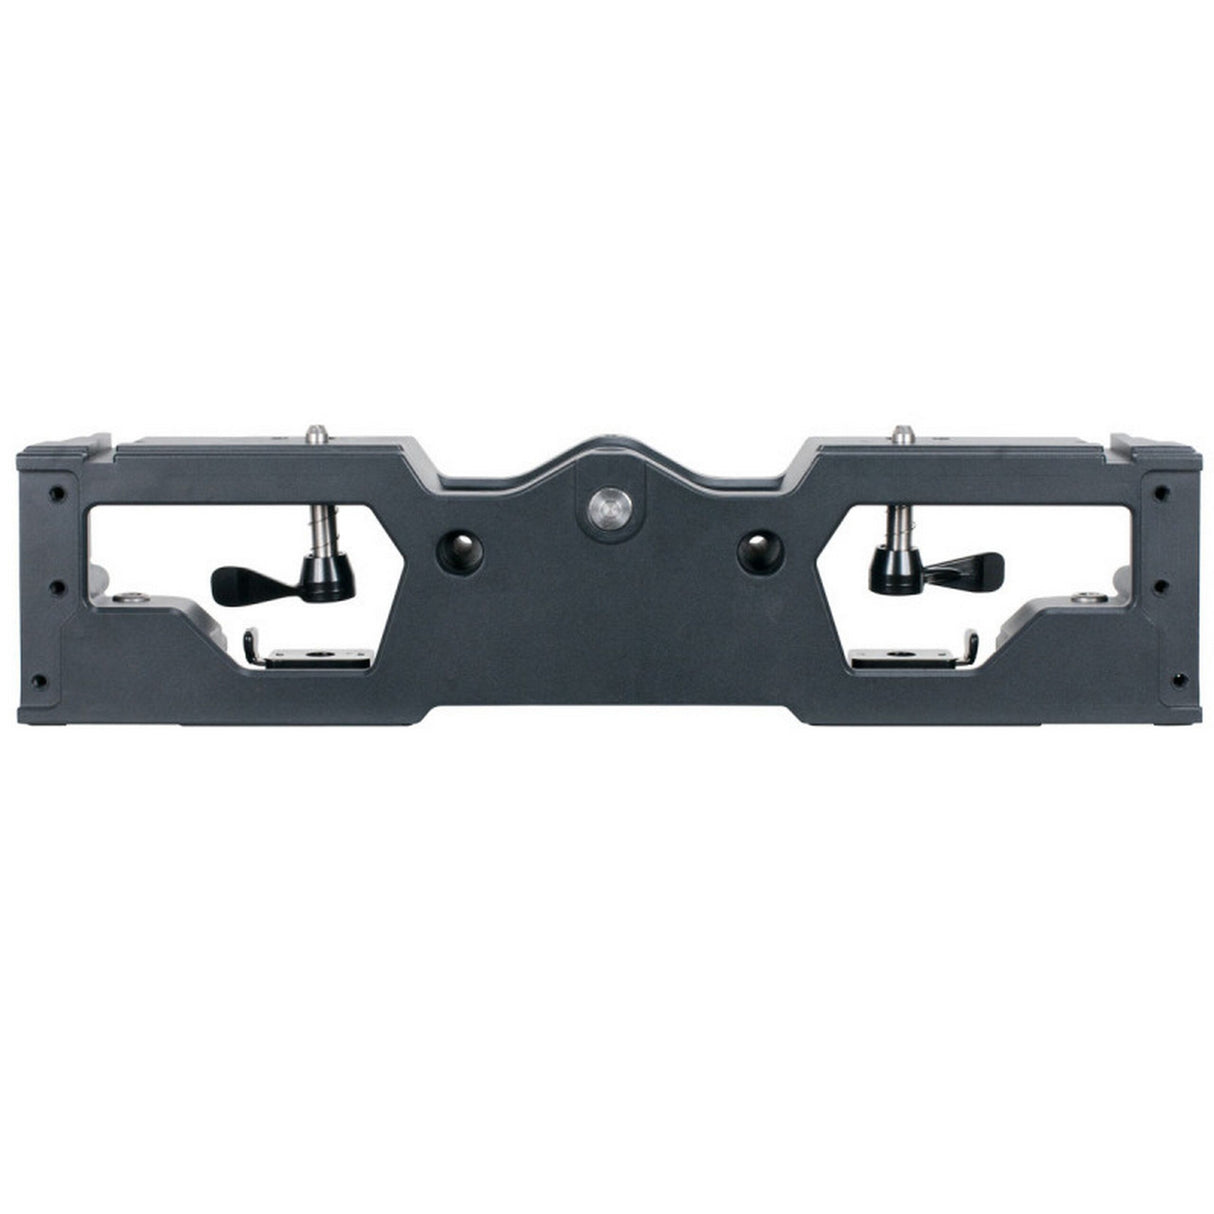 ADJ VS RB1 Single Panel Rigging / Ground Stick Bar for VS Series Video Panels